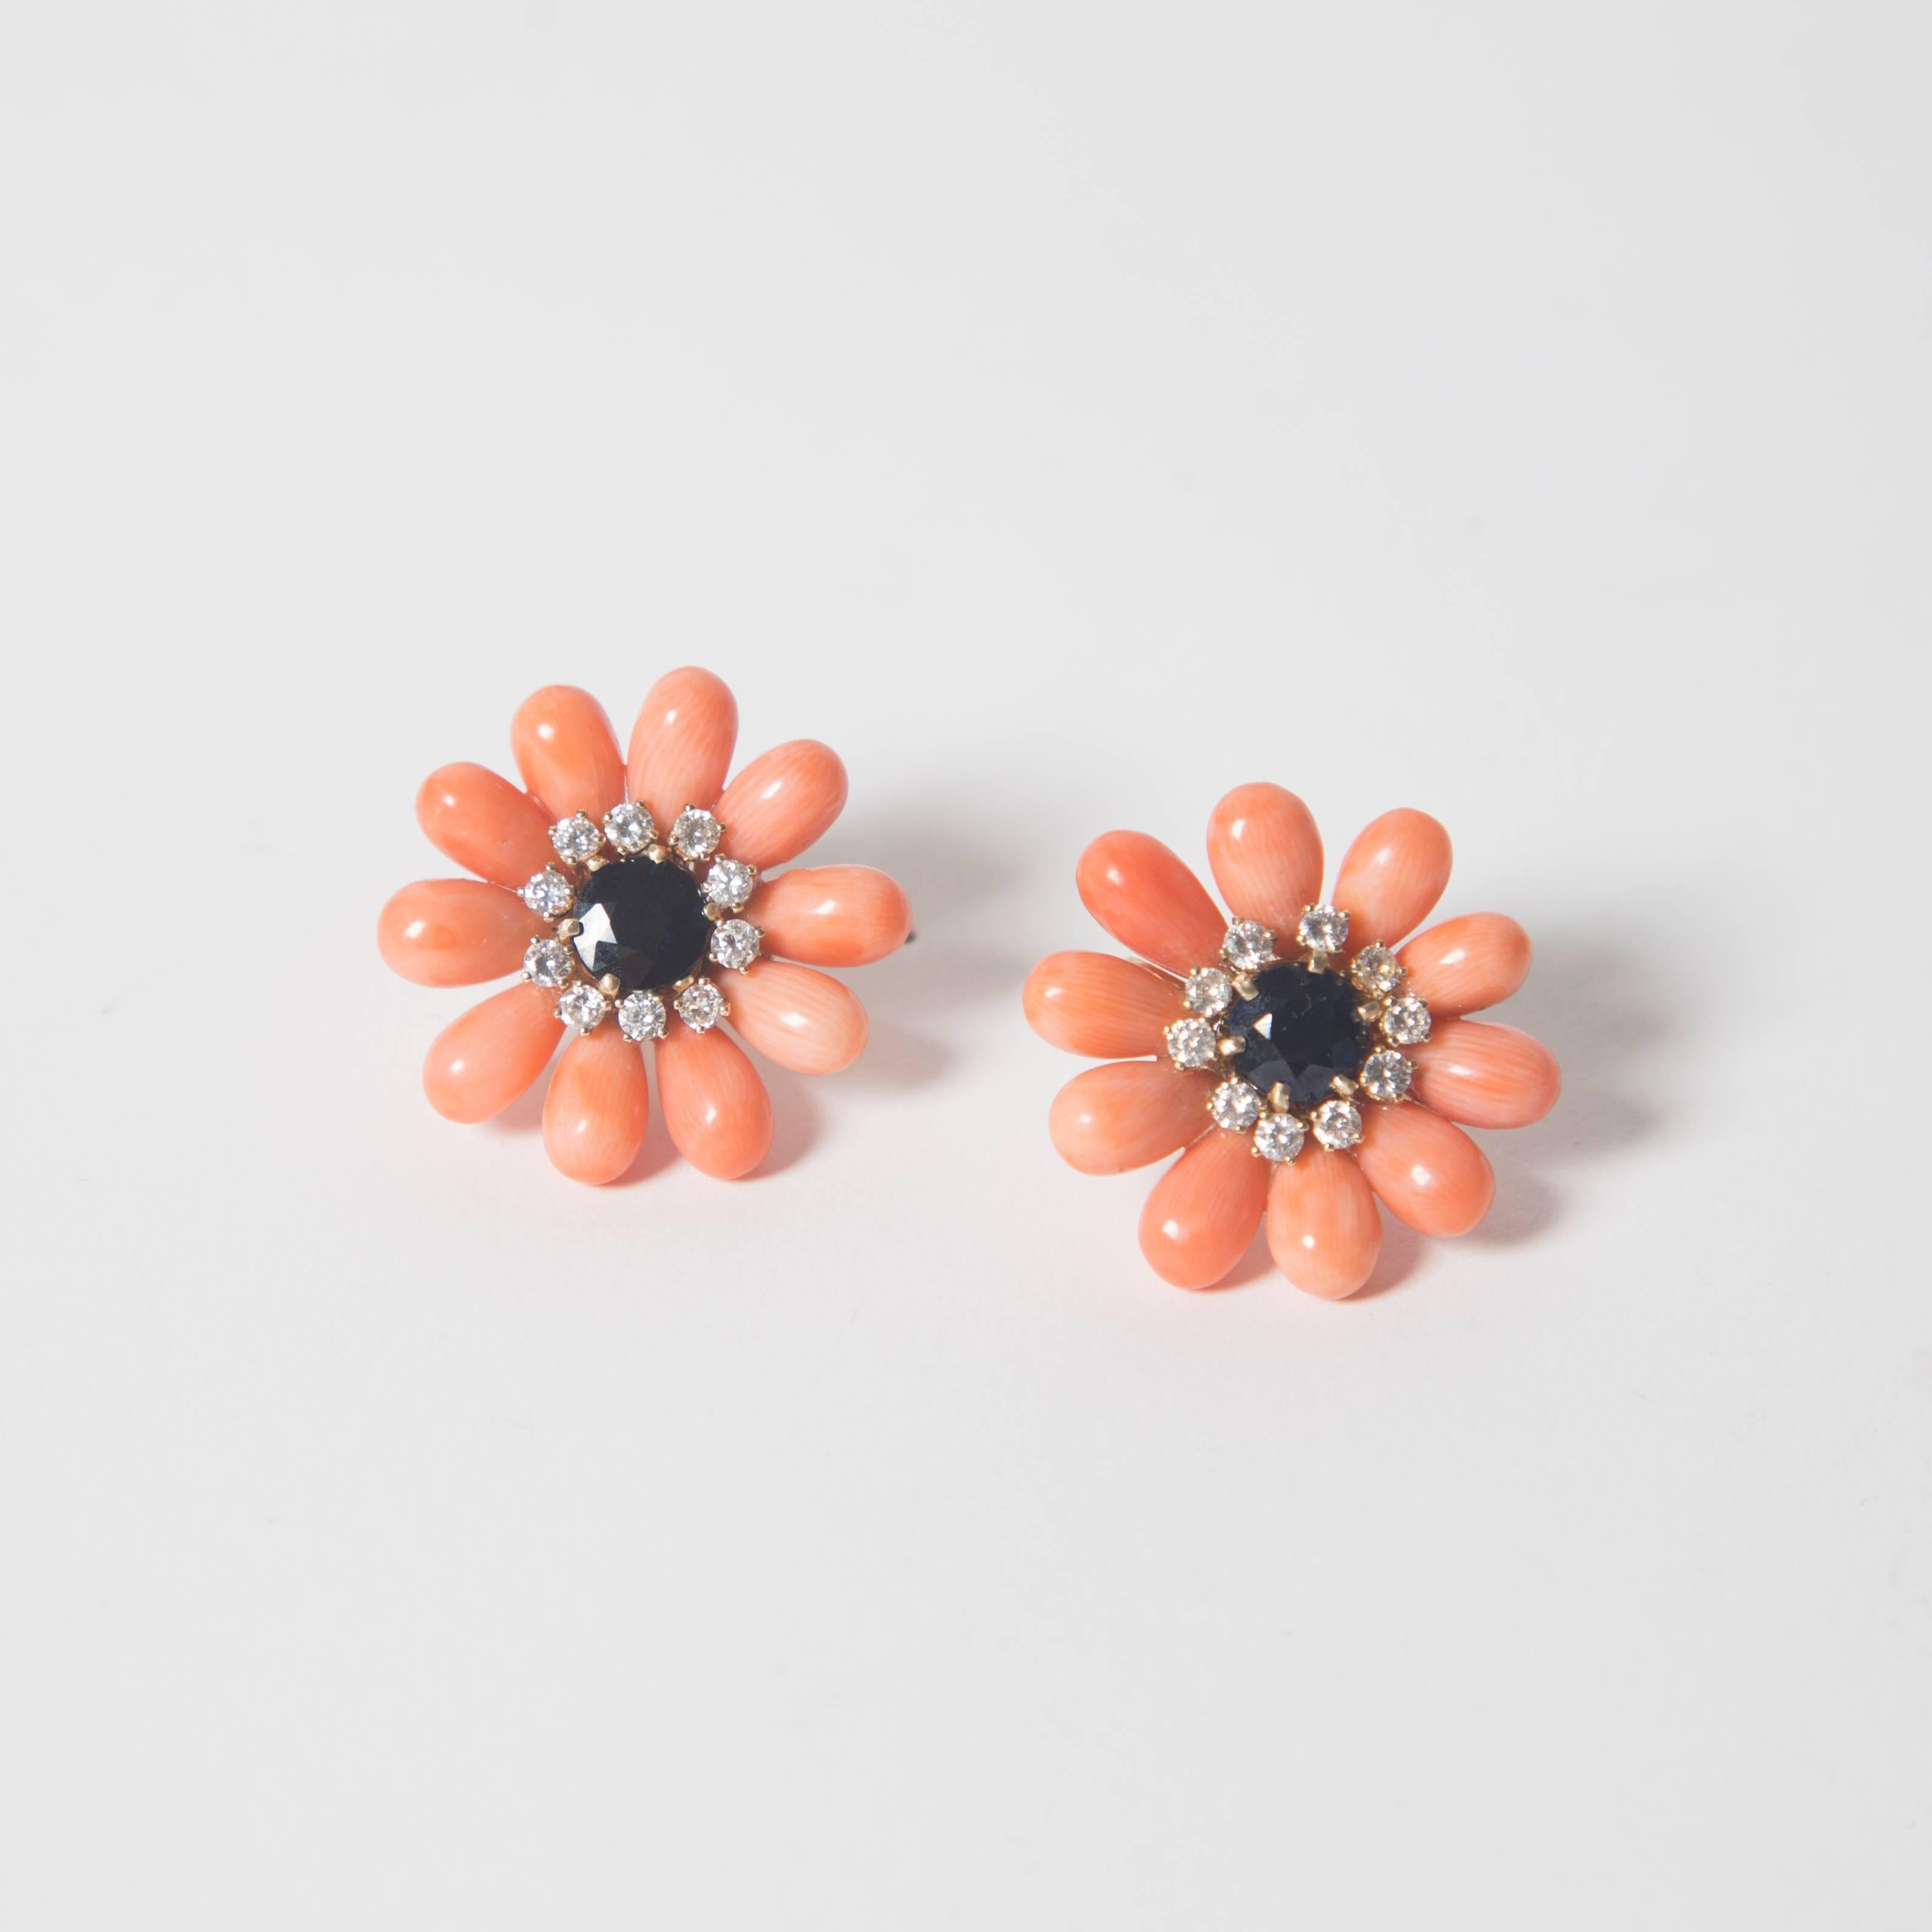 Sapphire and diamond stones centered around stunning precious coral petals. 